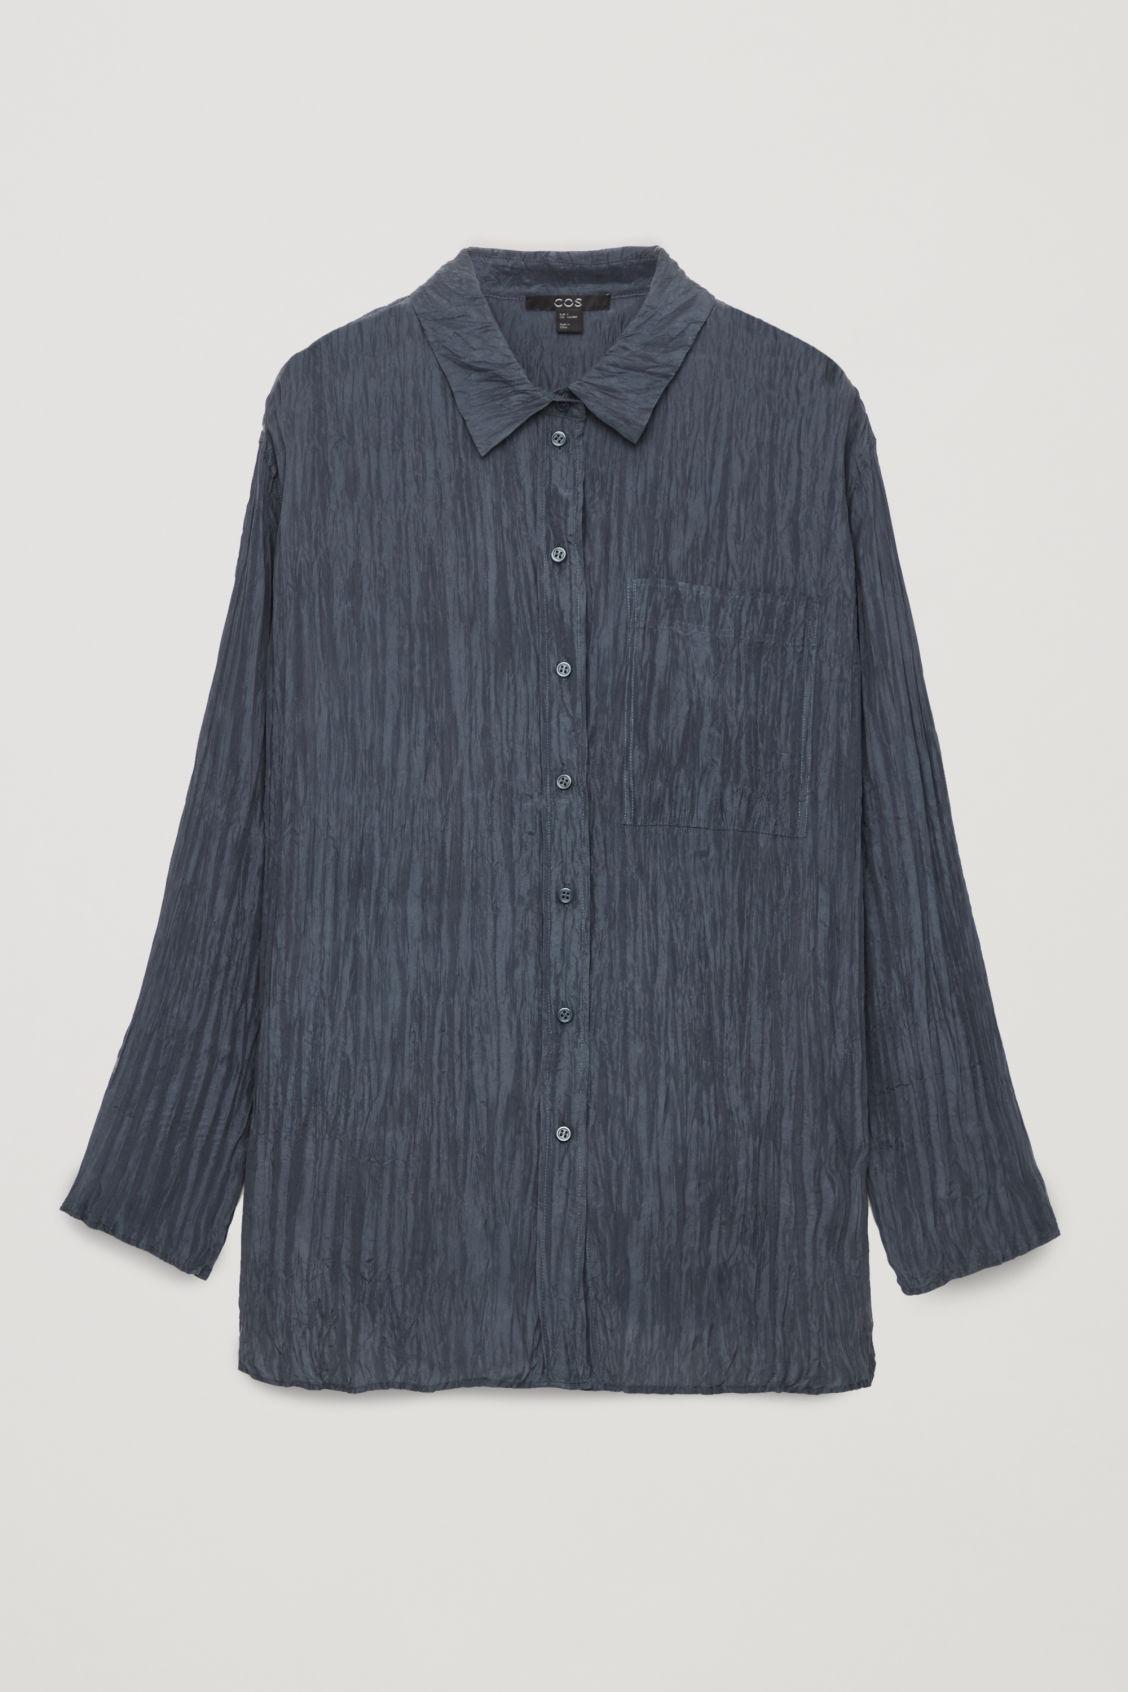 COS Crinkled Silk Shirt in Blue - Lyst